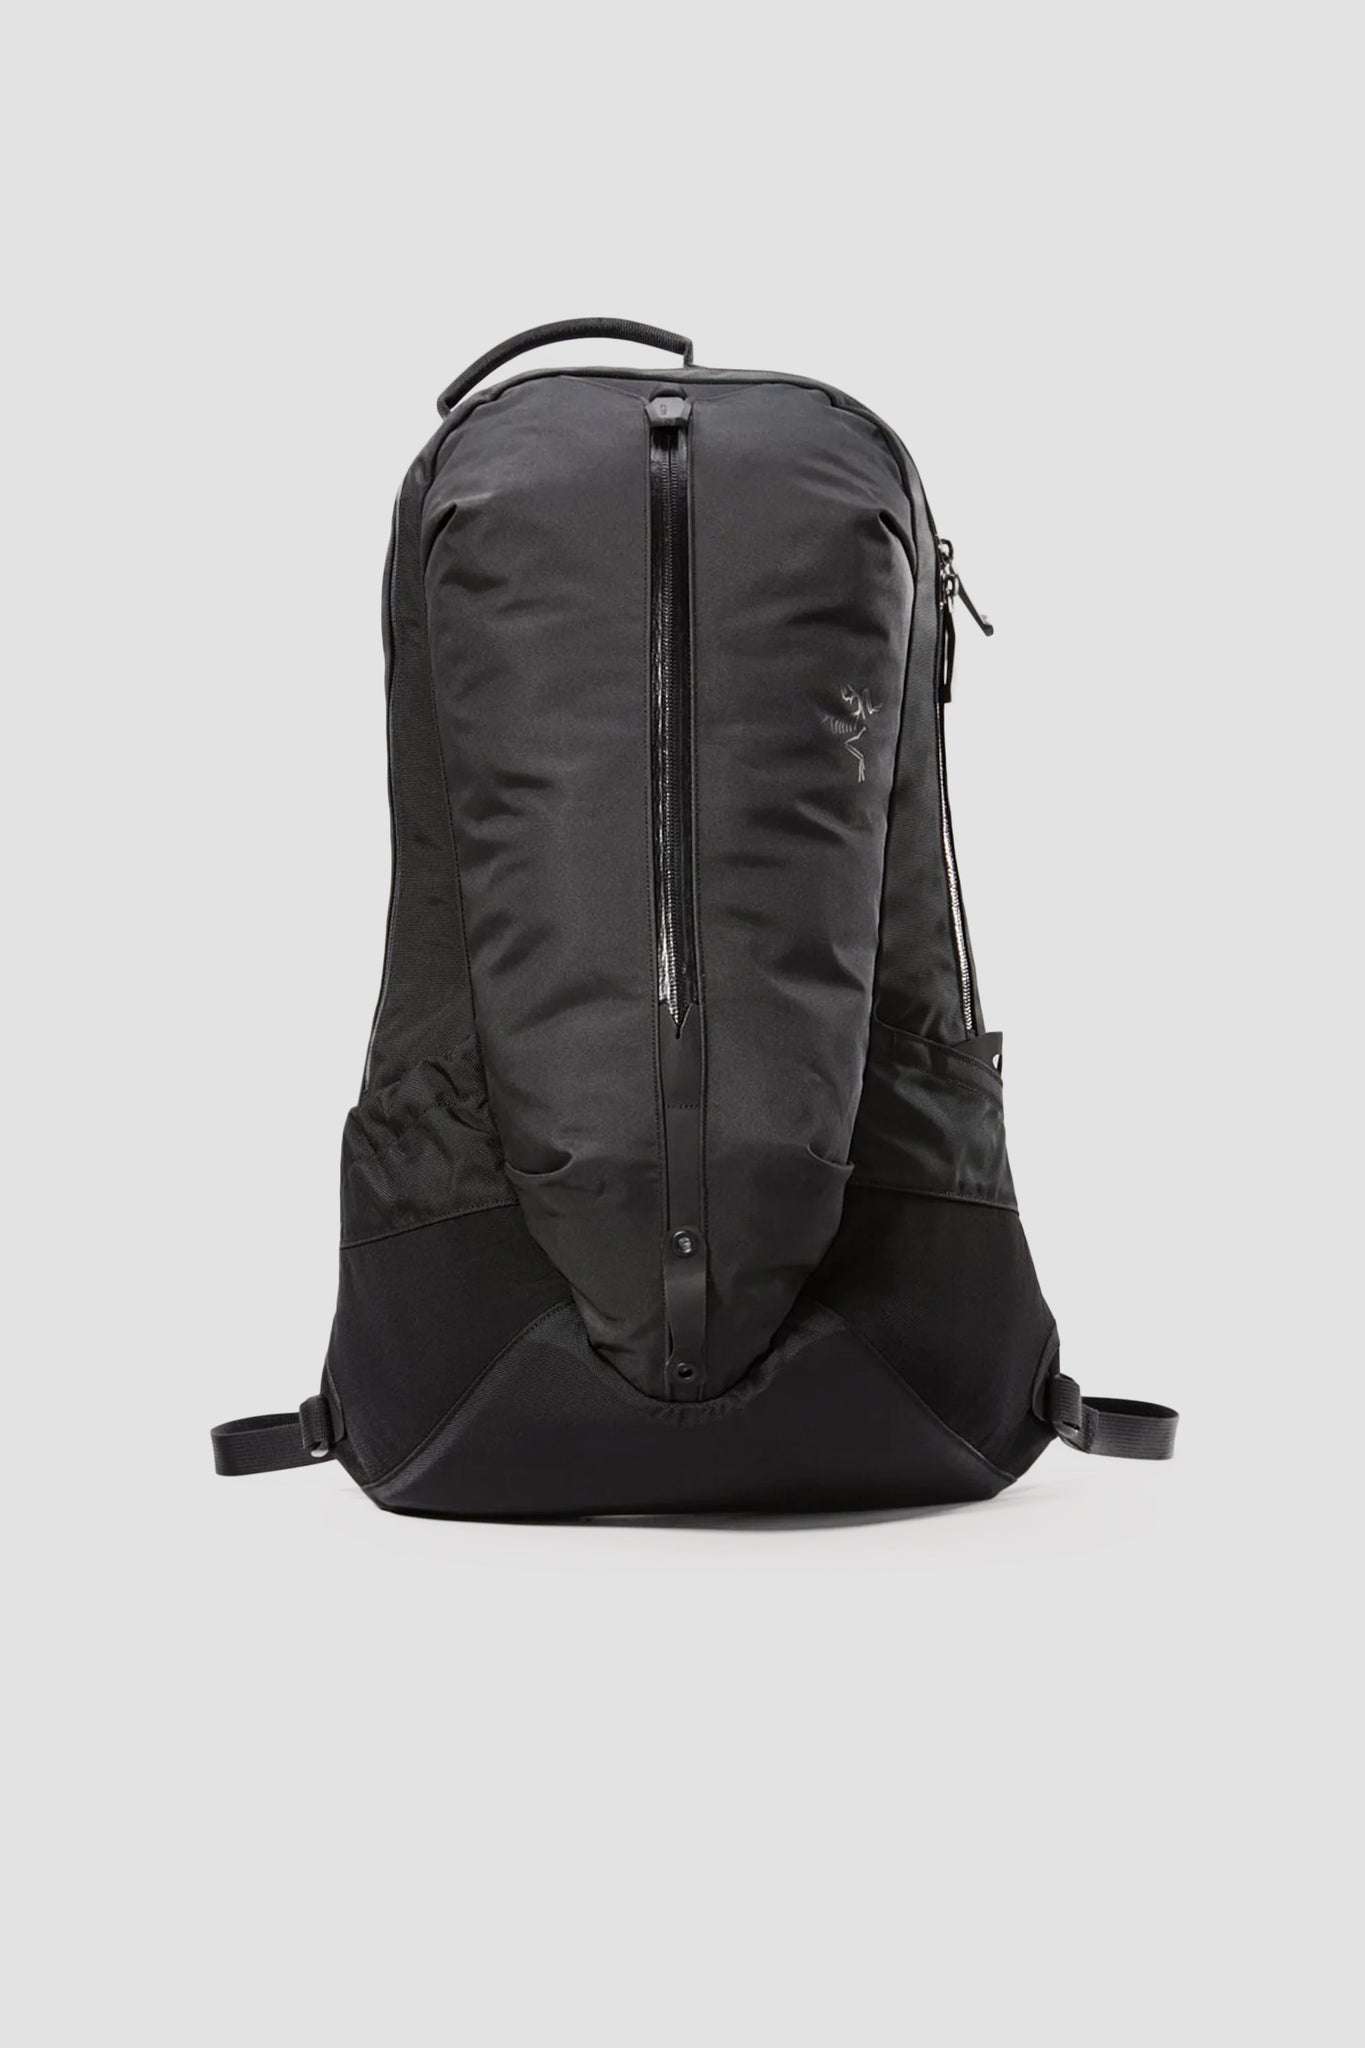 Arc'teryx Arro 22 Backpack in Black II